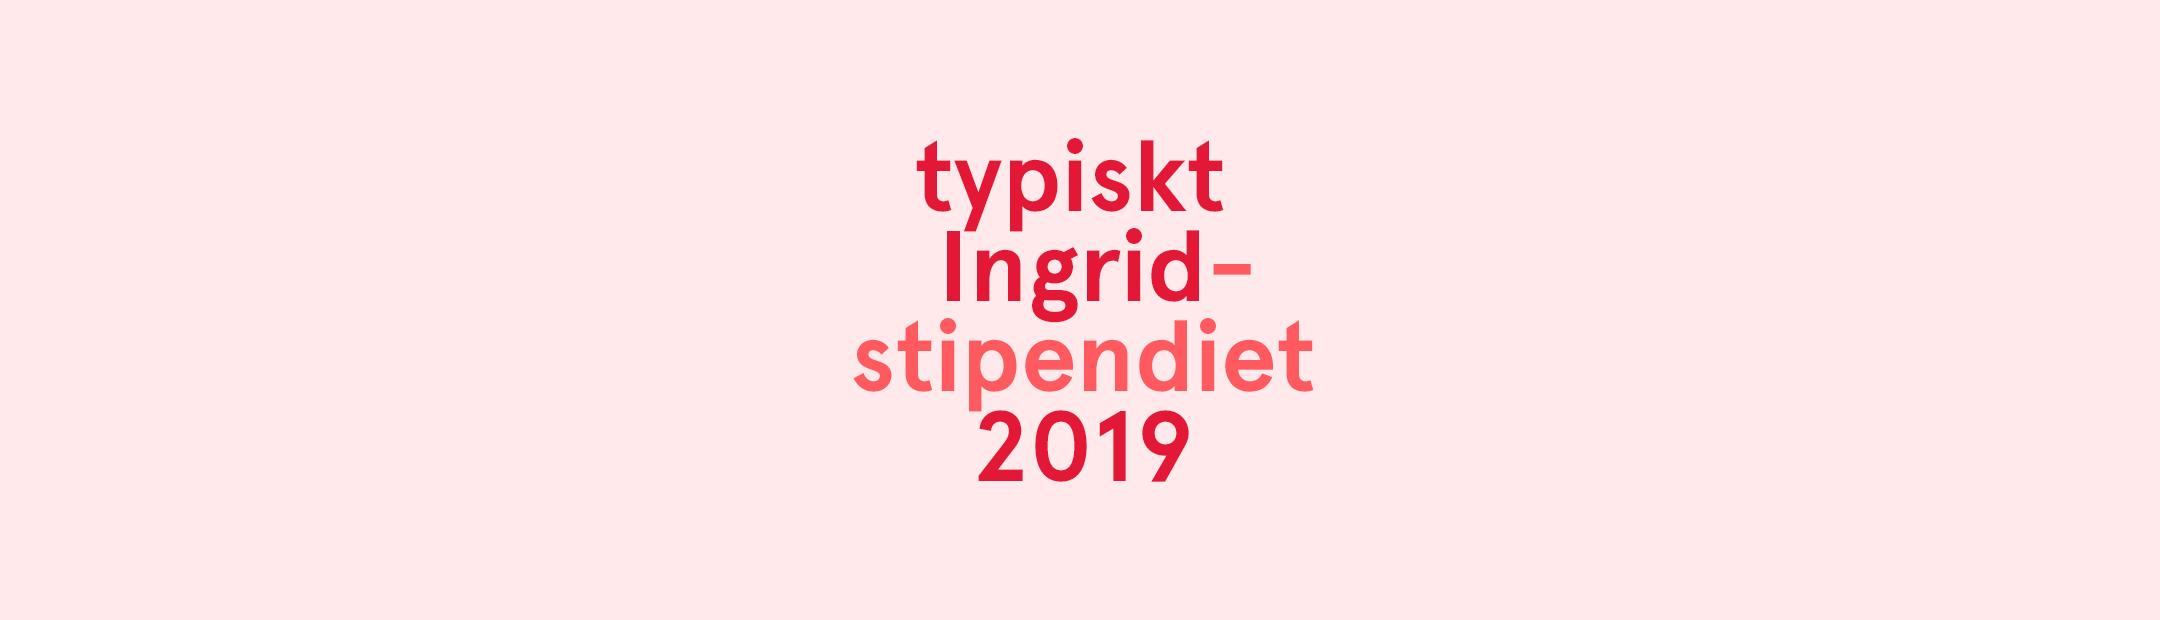 Typiskt Ingrid-stipendiet 2019 Friskis&Svettis Uppsala